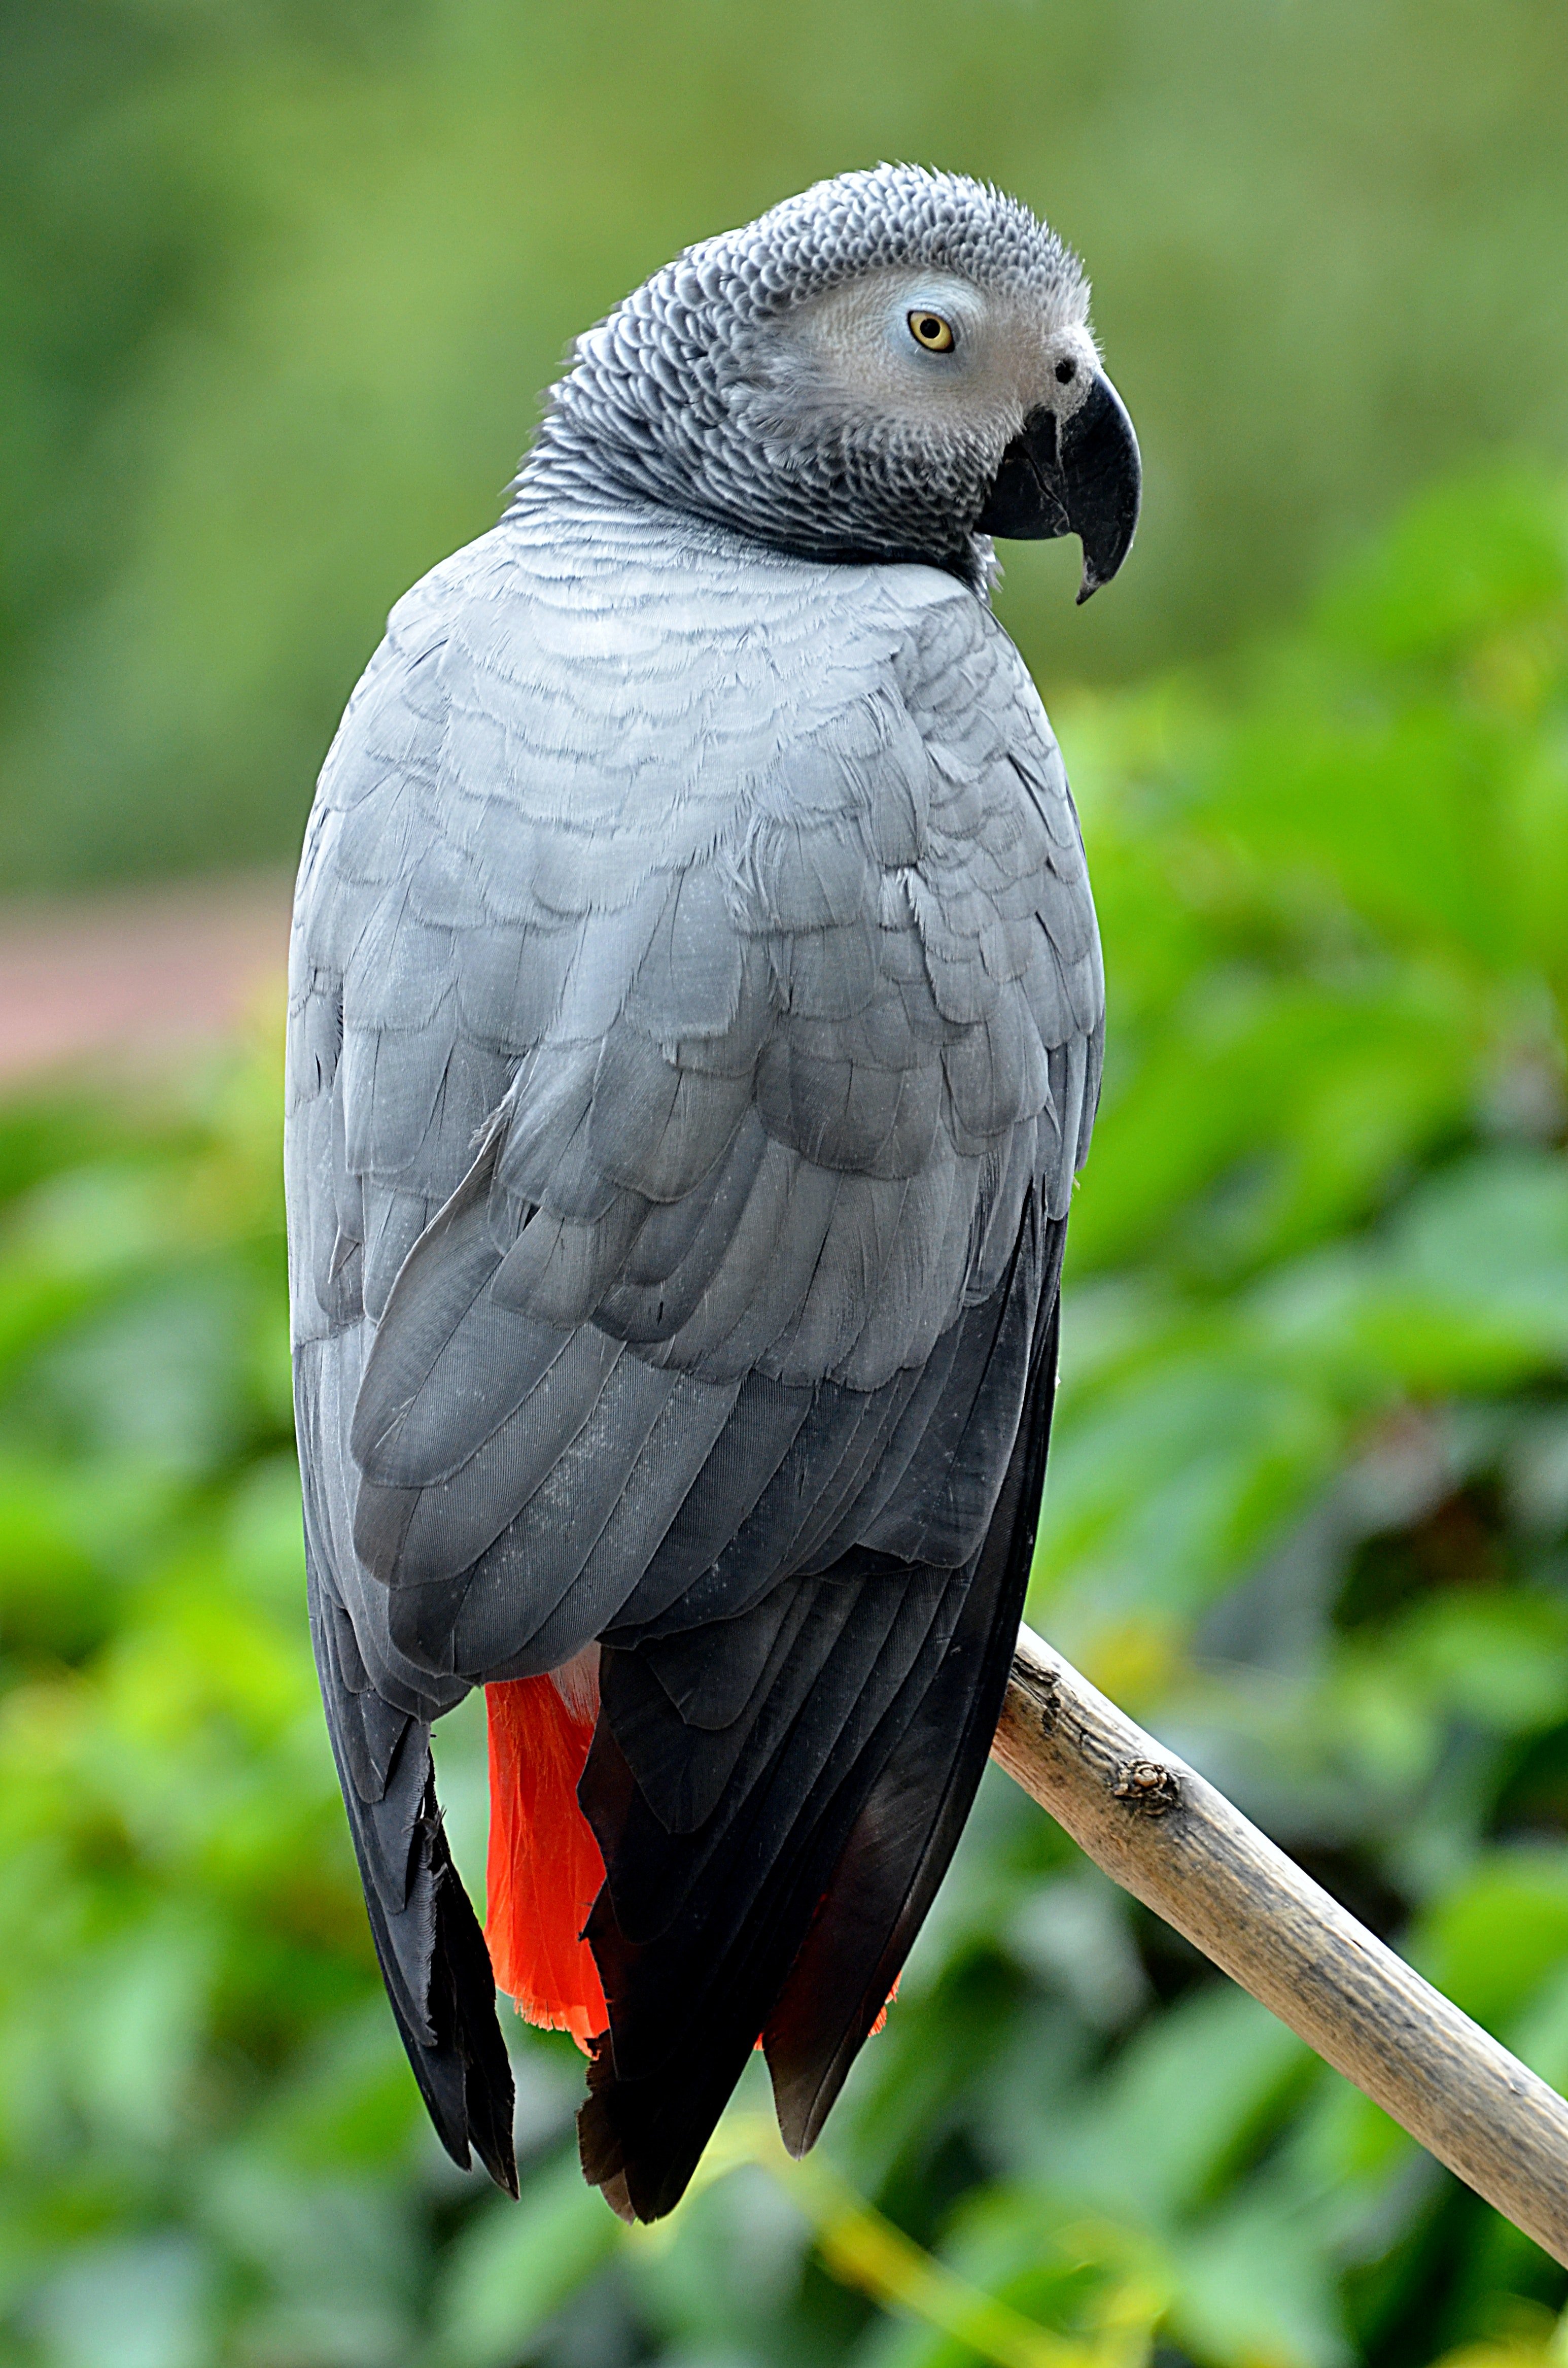 A parrot perched on a stick. | Photo: Pexels